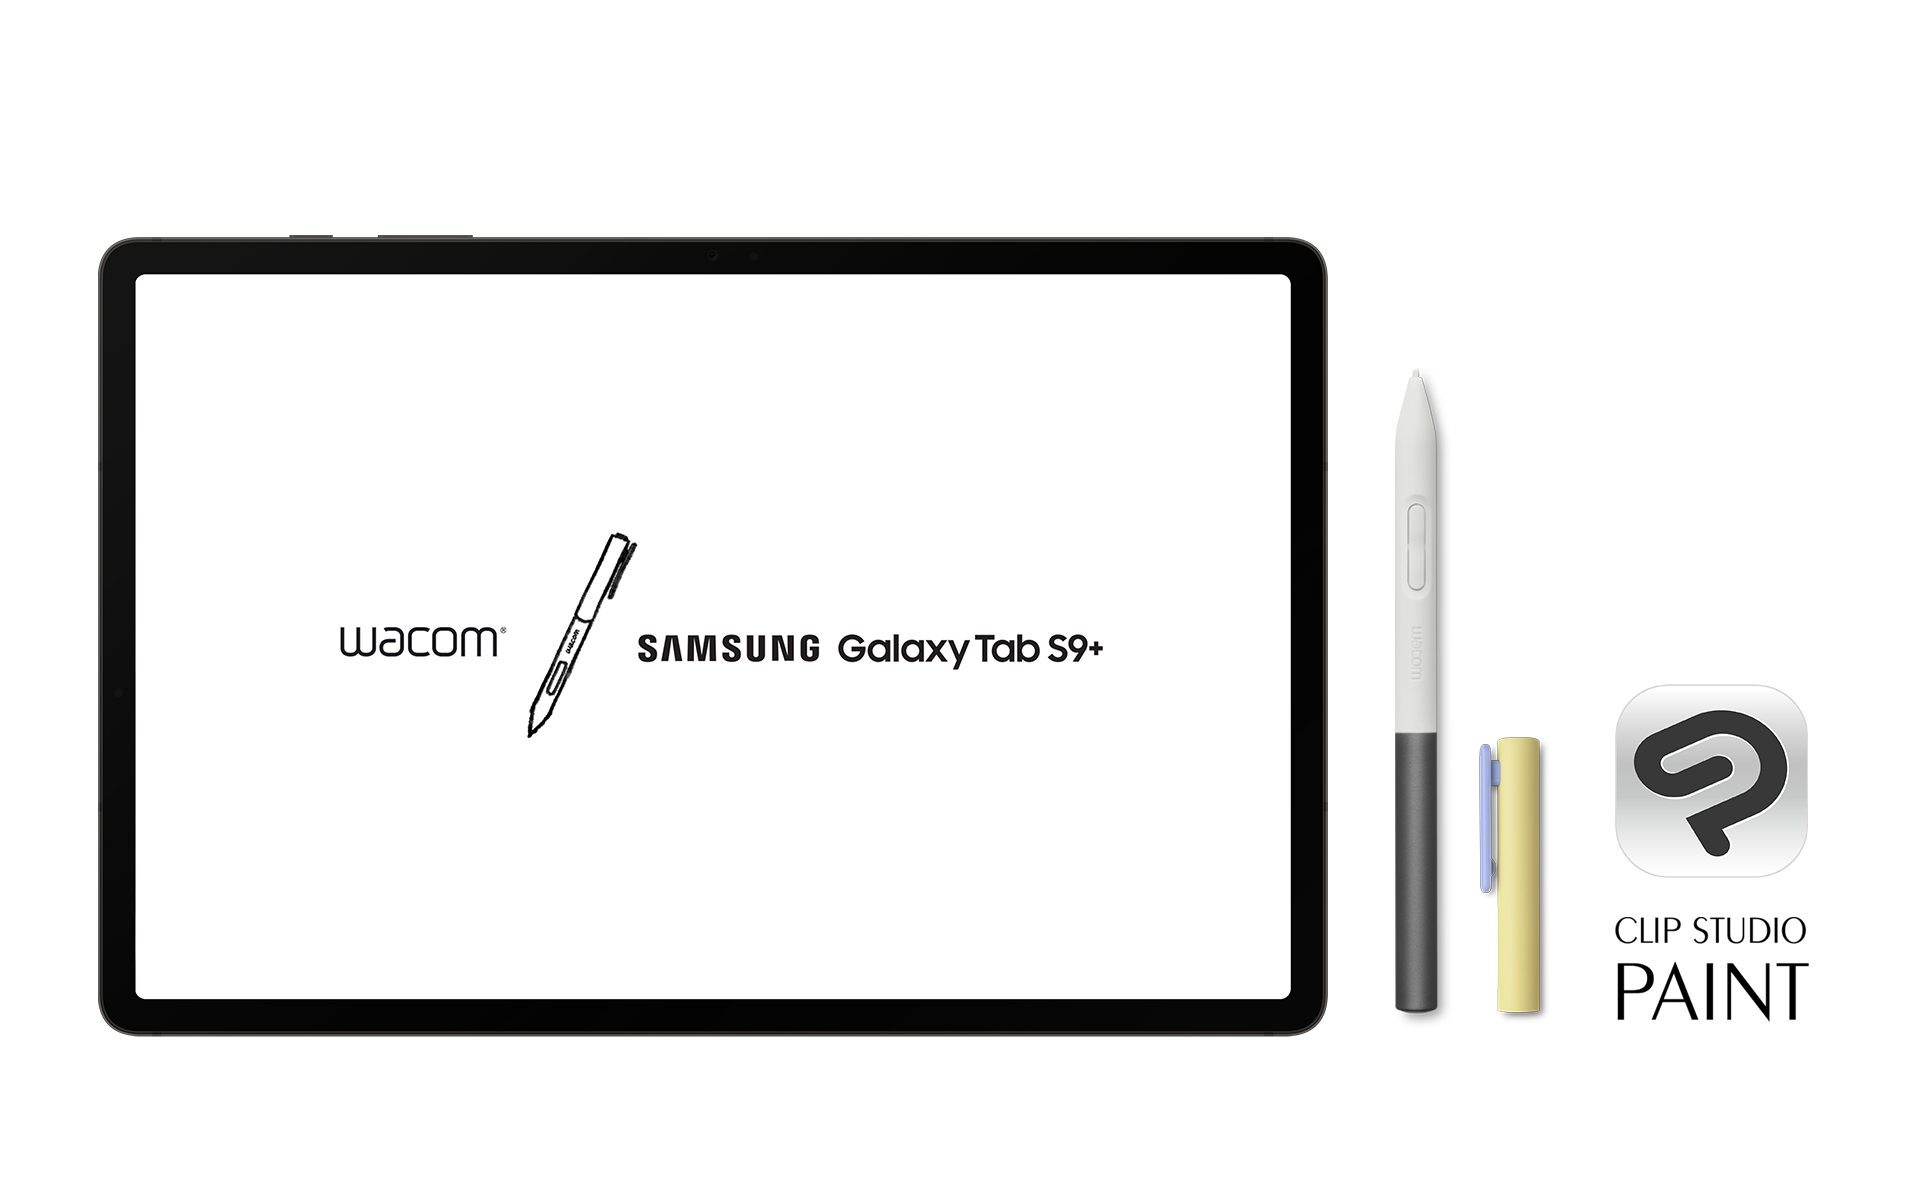 ‘CLIP STUDIO PAINT’와 ‘Galaxy Tab S9+’, 그리고 Wacom Pen이 한 세트로 구성된 학생 한정 모델 ‘Wacom Mobile Creative Edition’이 한국 와콤에서 발매　와콤의 디지털 펜 기술이 탑재된 태블릿과 간단한 조작 화면으로 최적의 학습 환경 제공